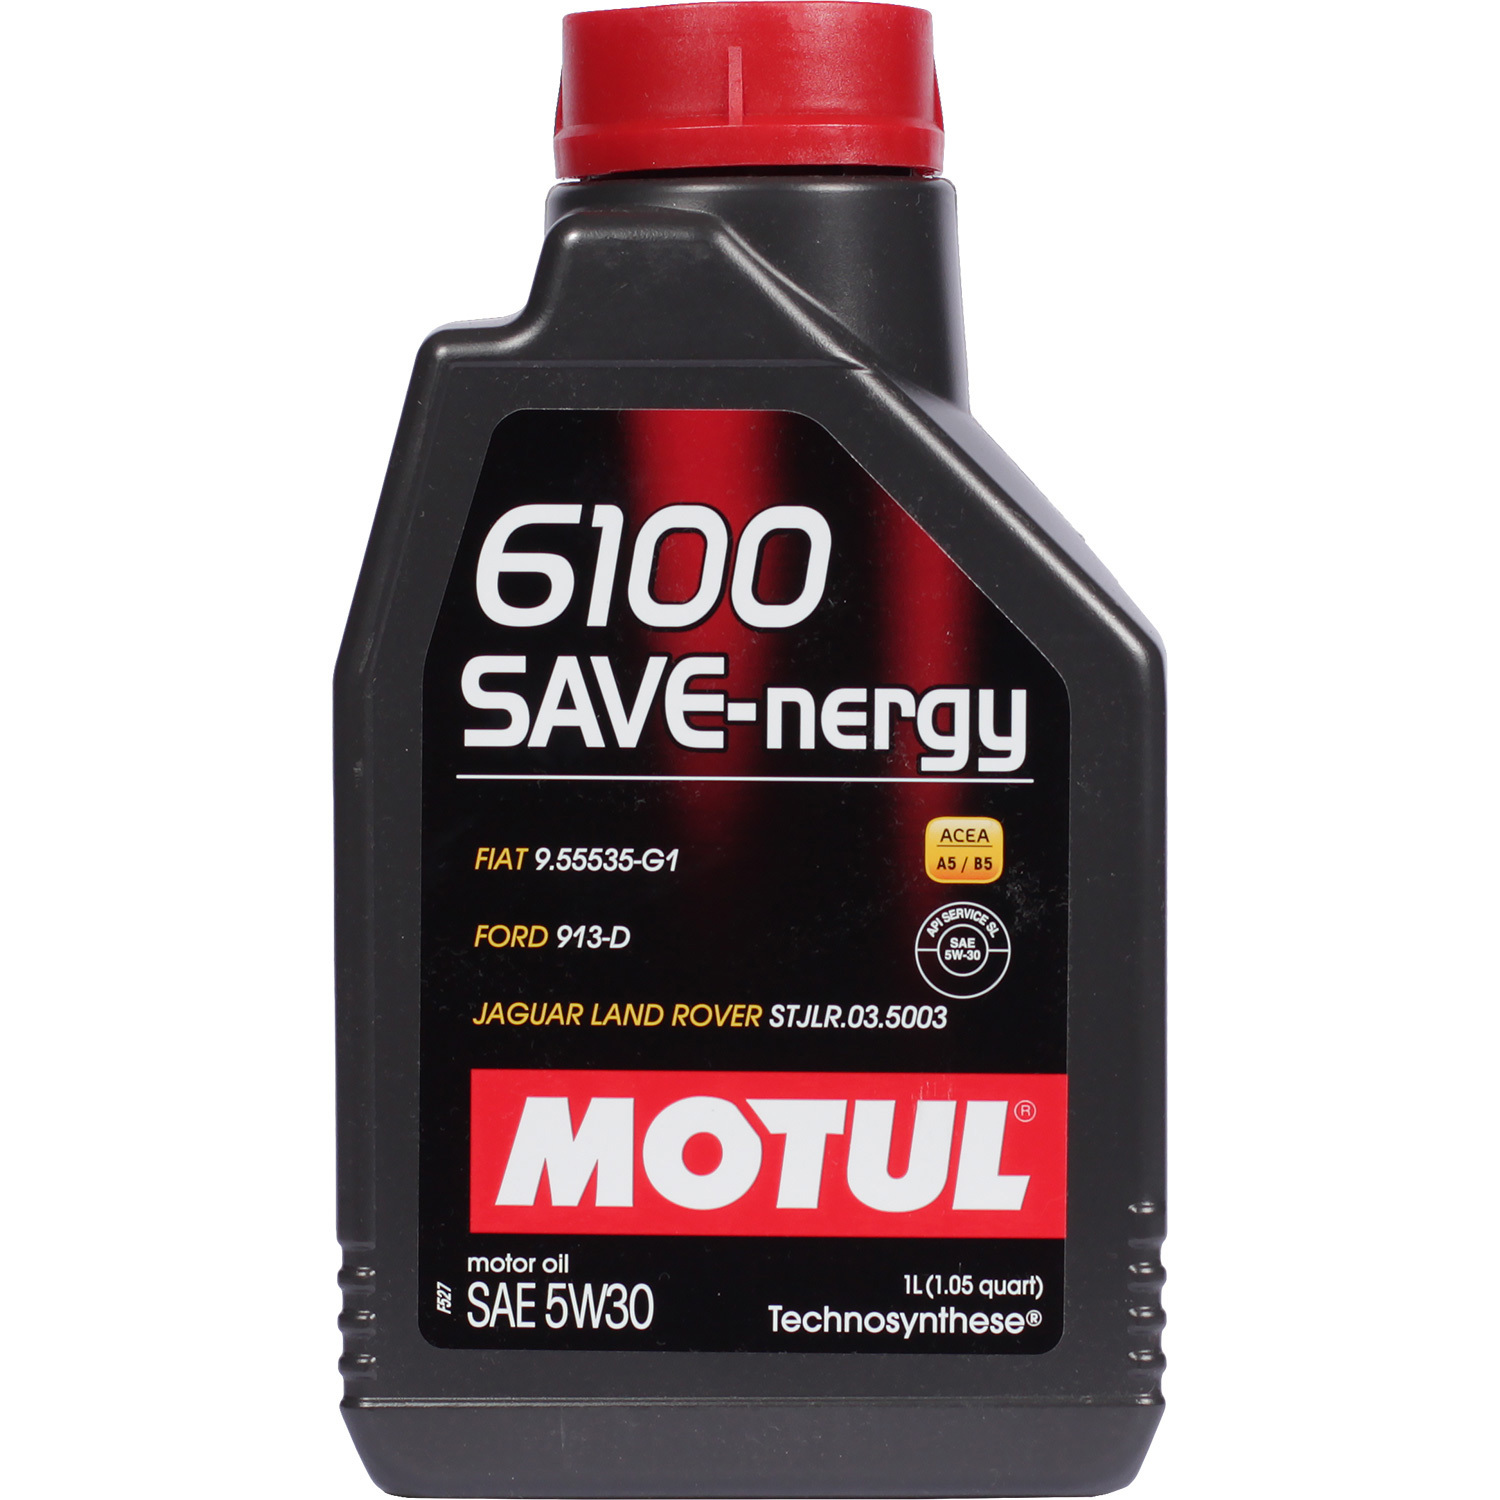 Motul Моторное масло Motul 6100 SAVE-NERGY 5W-30, 1 л масло моторное motul 6100 syn clean 5w 30 5 л 107948